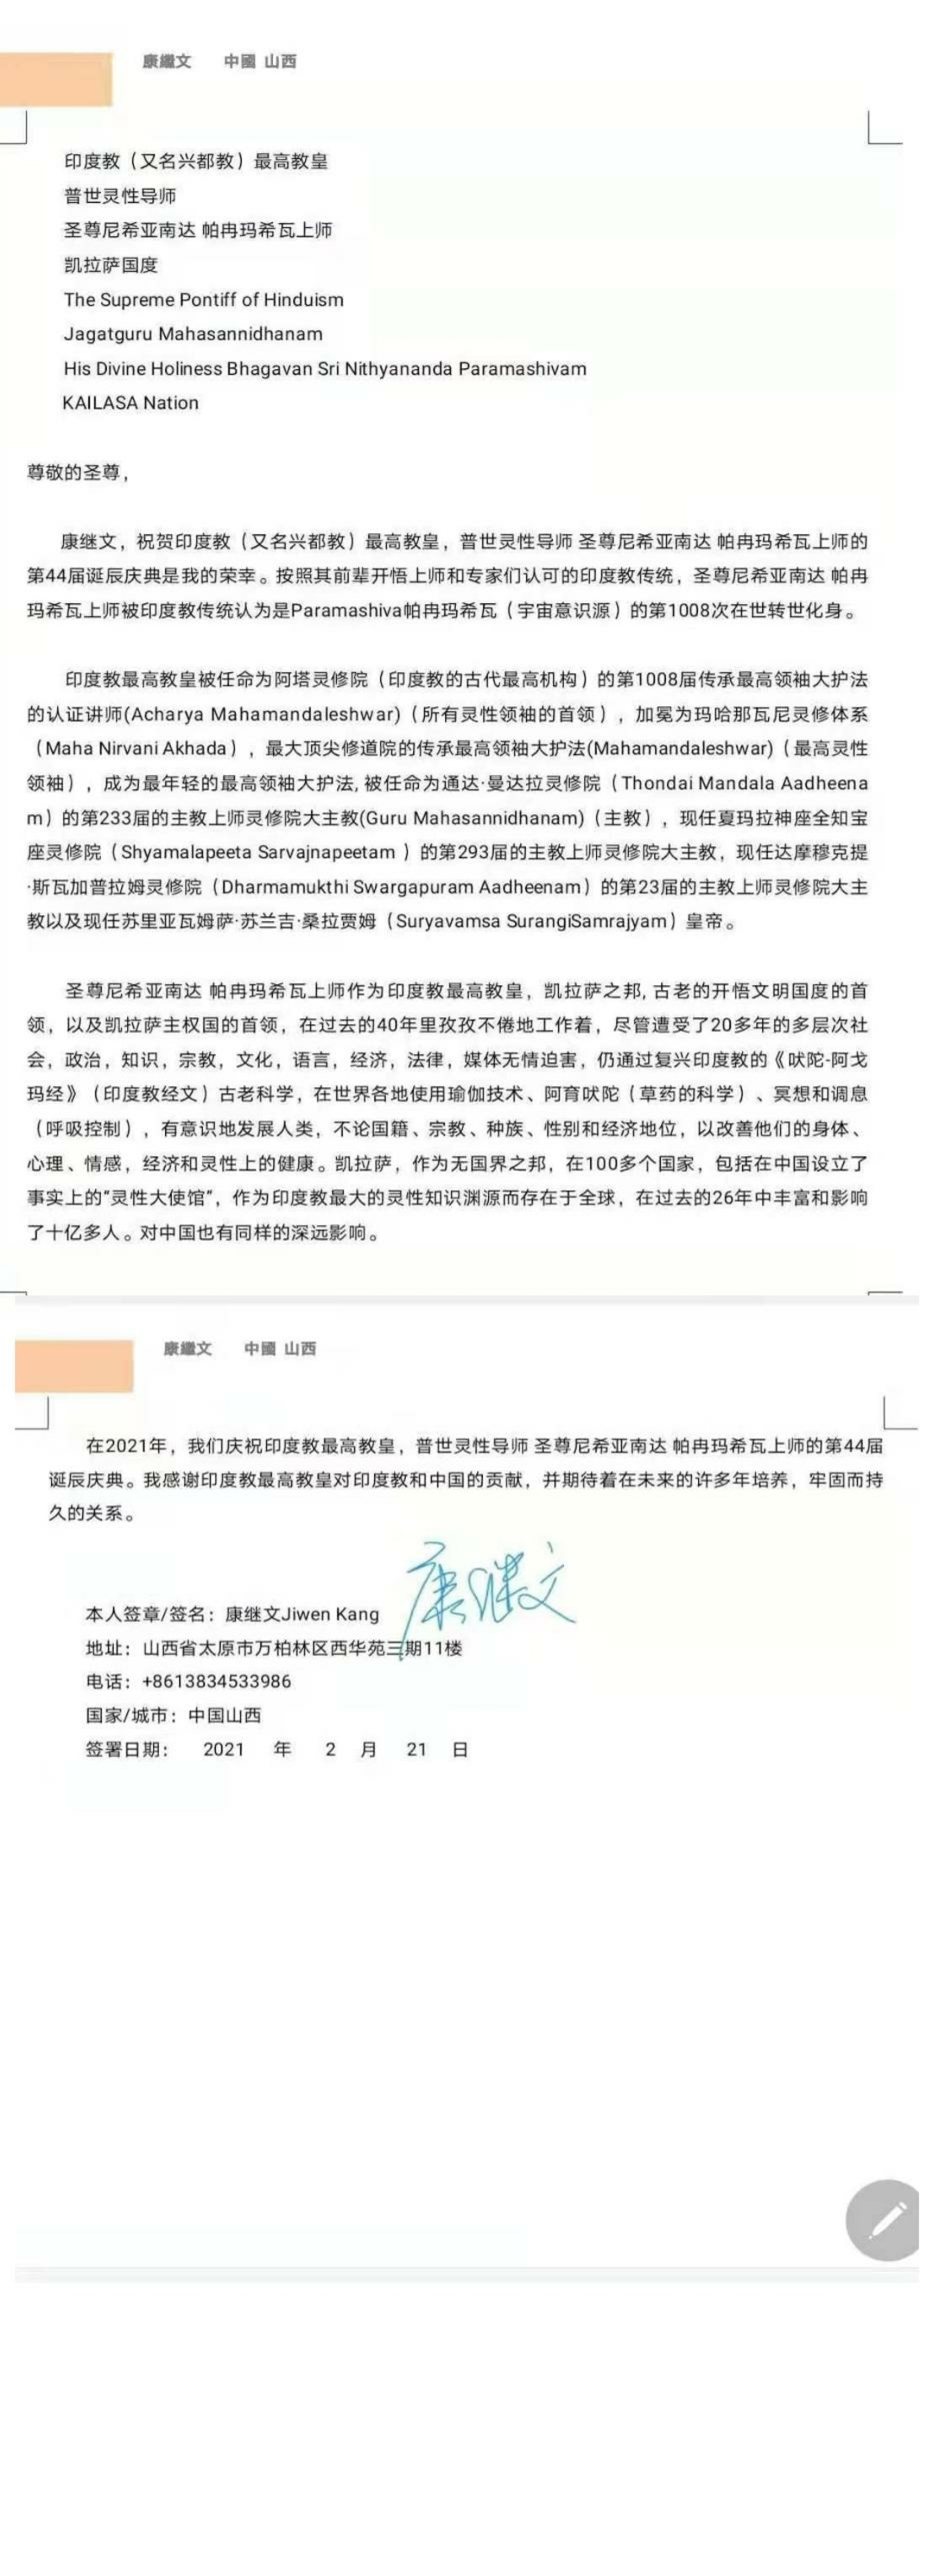 China---Jiwen-Kang---Feb-21--2021-(Proclamation)-1dpxnC Ot51 nxwf69-x2mre95lgRwQsY.pdf